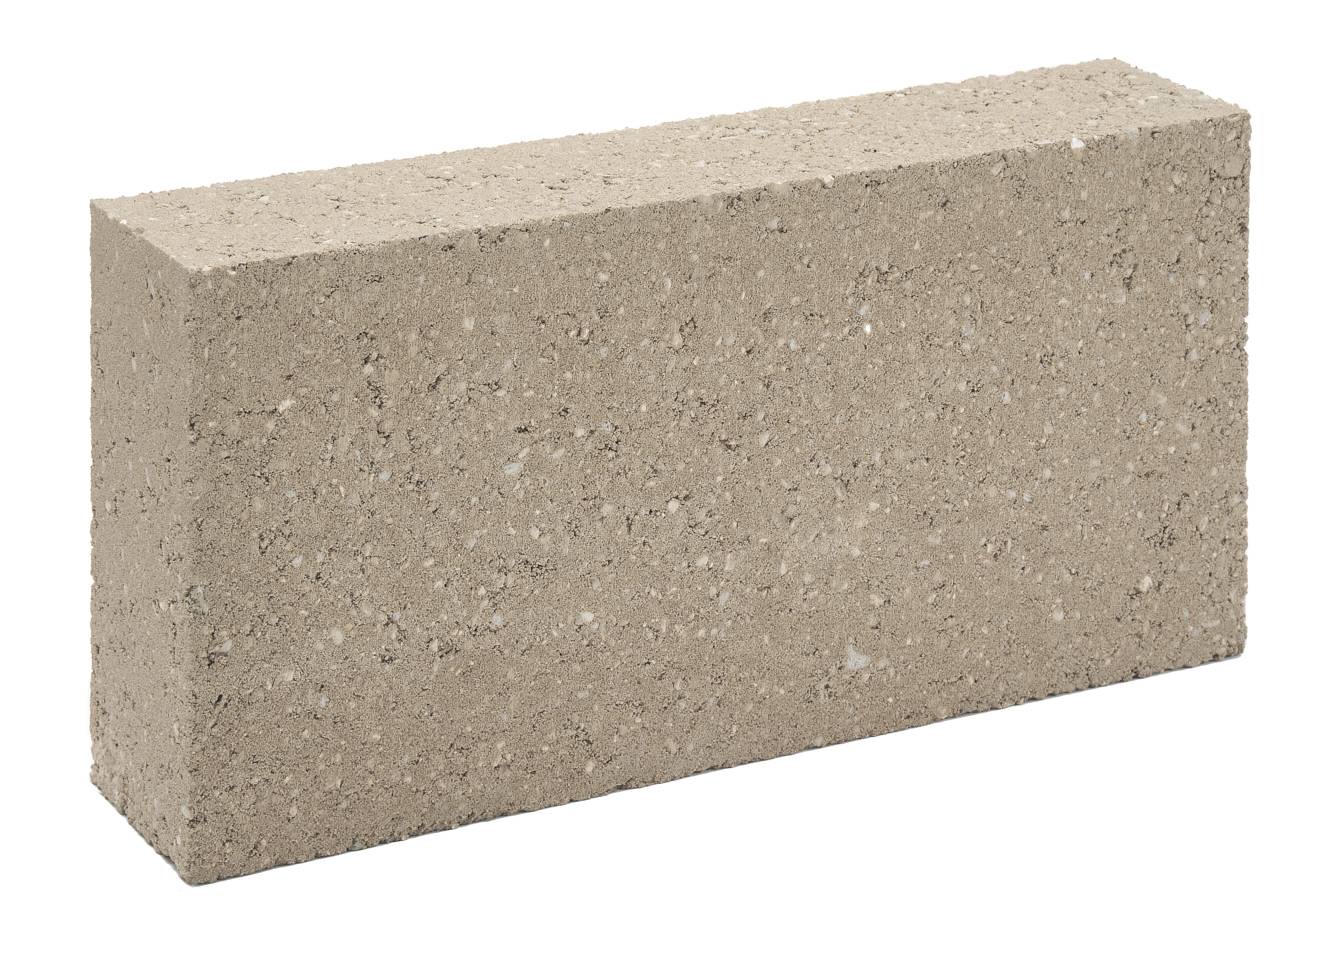 Lignacrete 140 mm Solid 17.5 N Concrete Blocks - High Density Robust Loadbearing Units